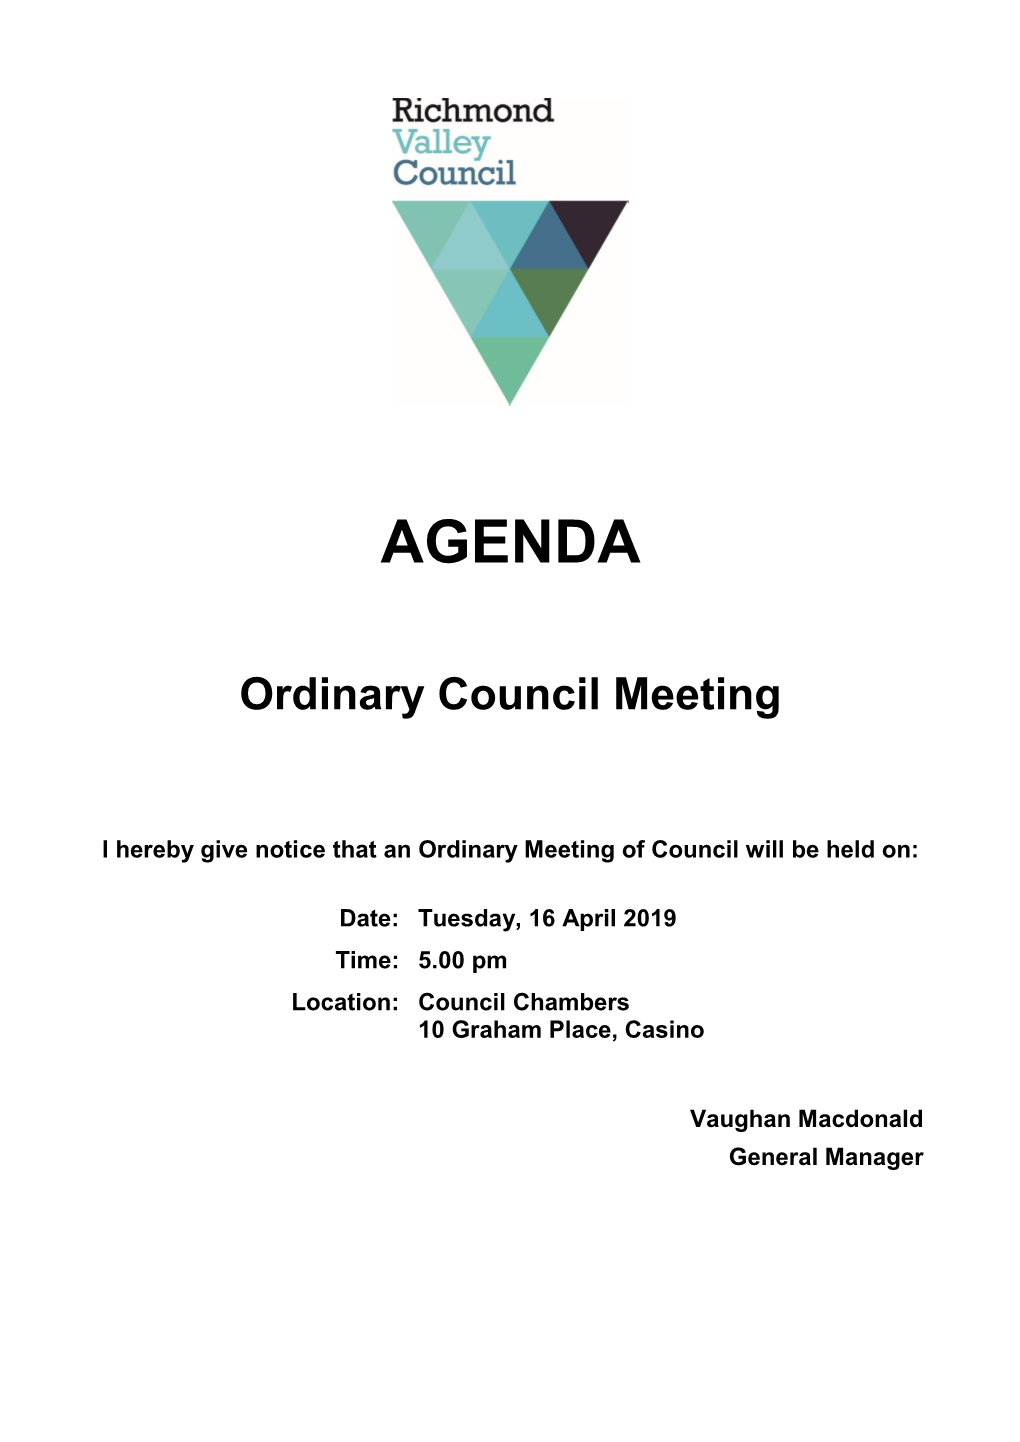 Agenda of Ordinary Council Meeting